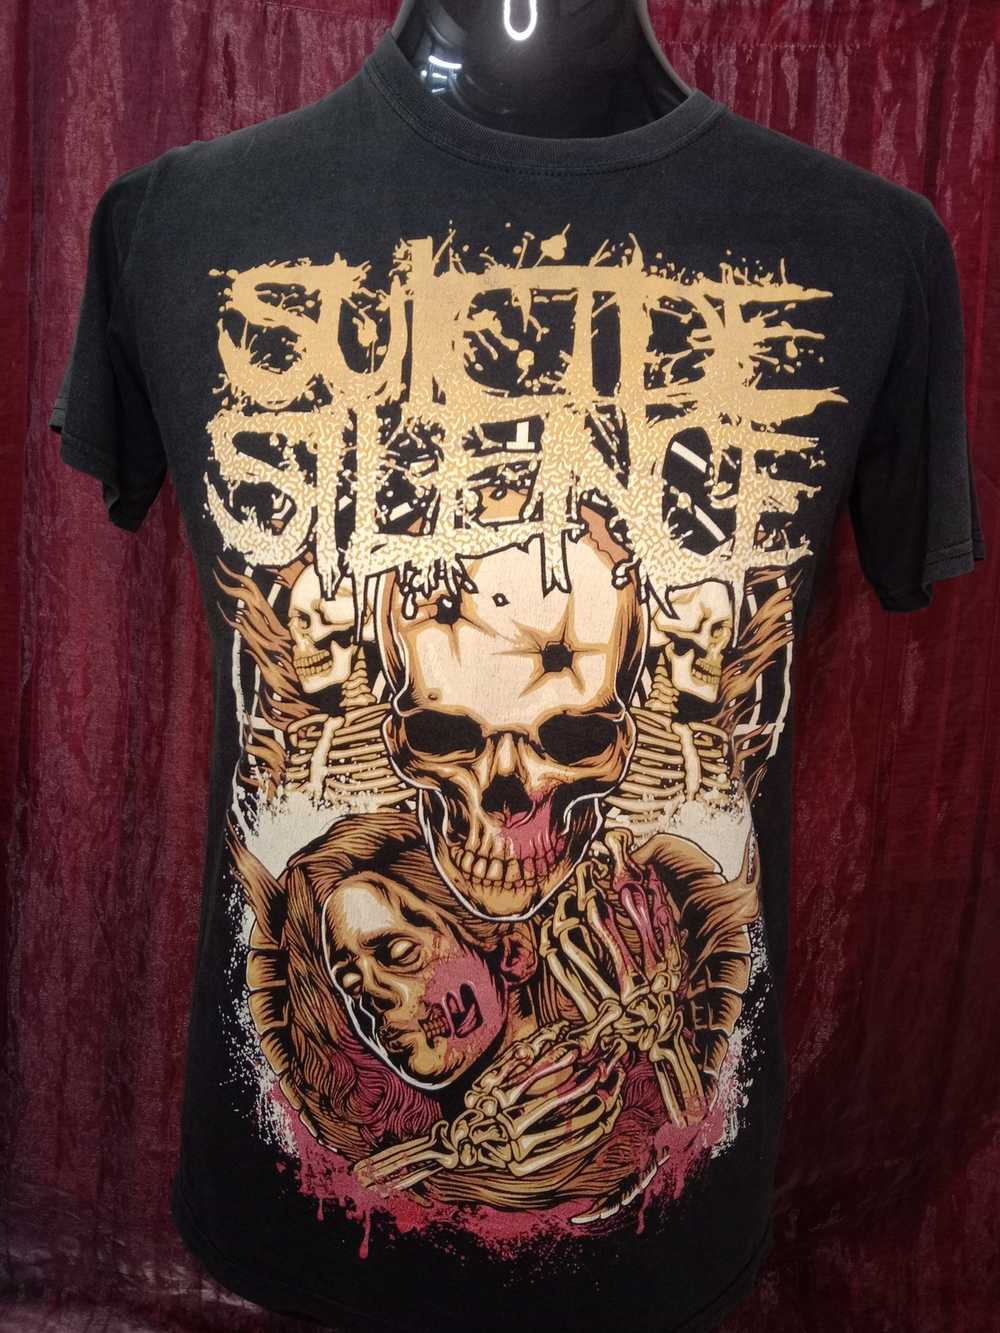 Vintage Suicide Silence - image 1